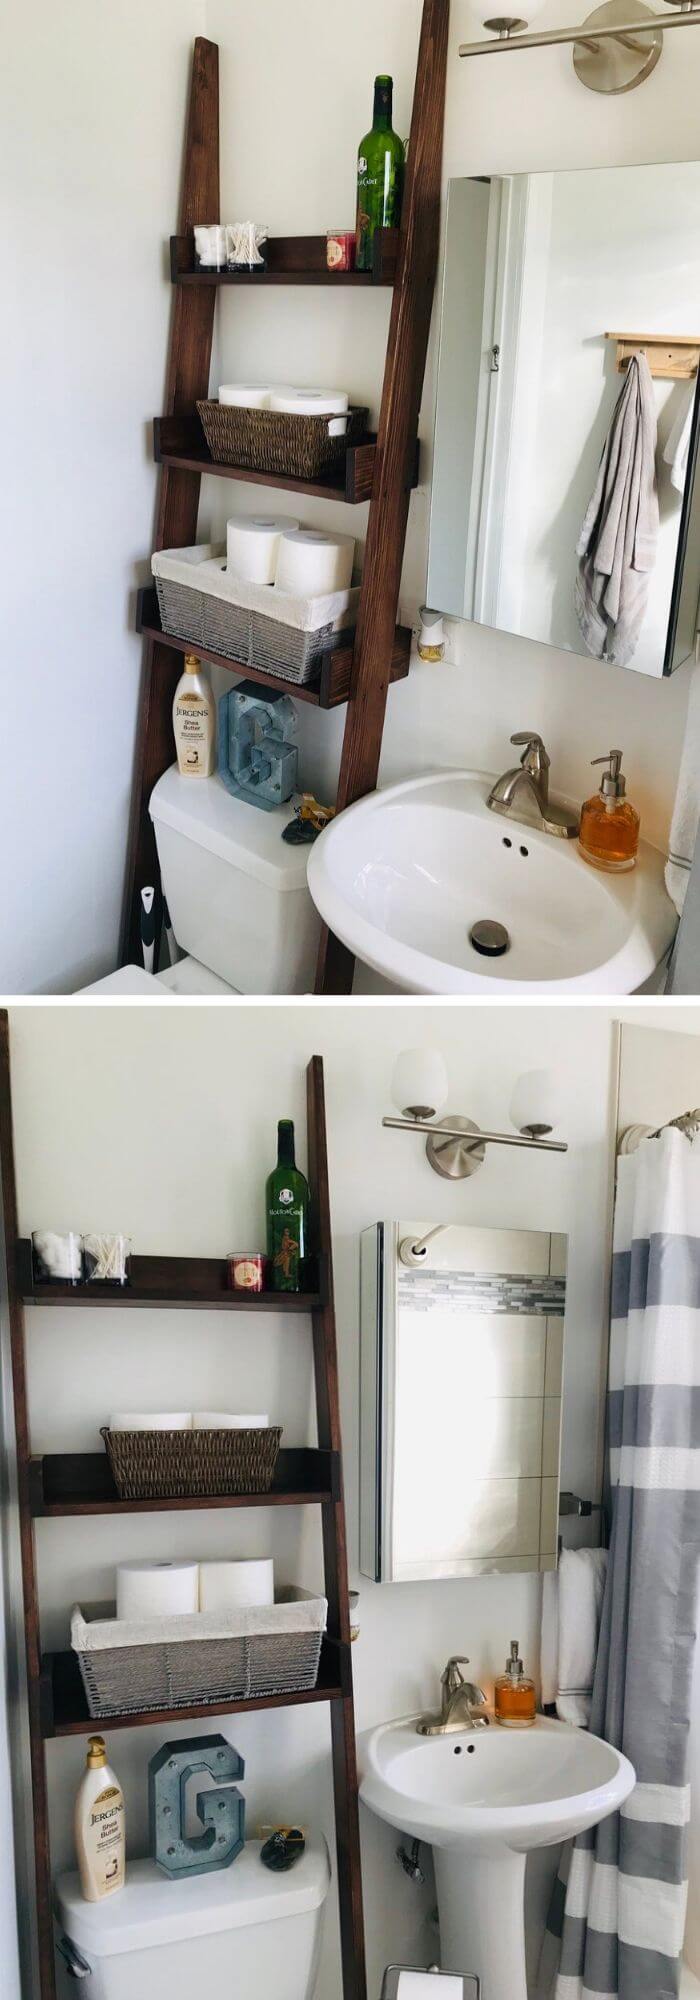 7 bathroom shelf ideas